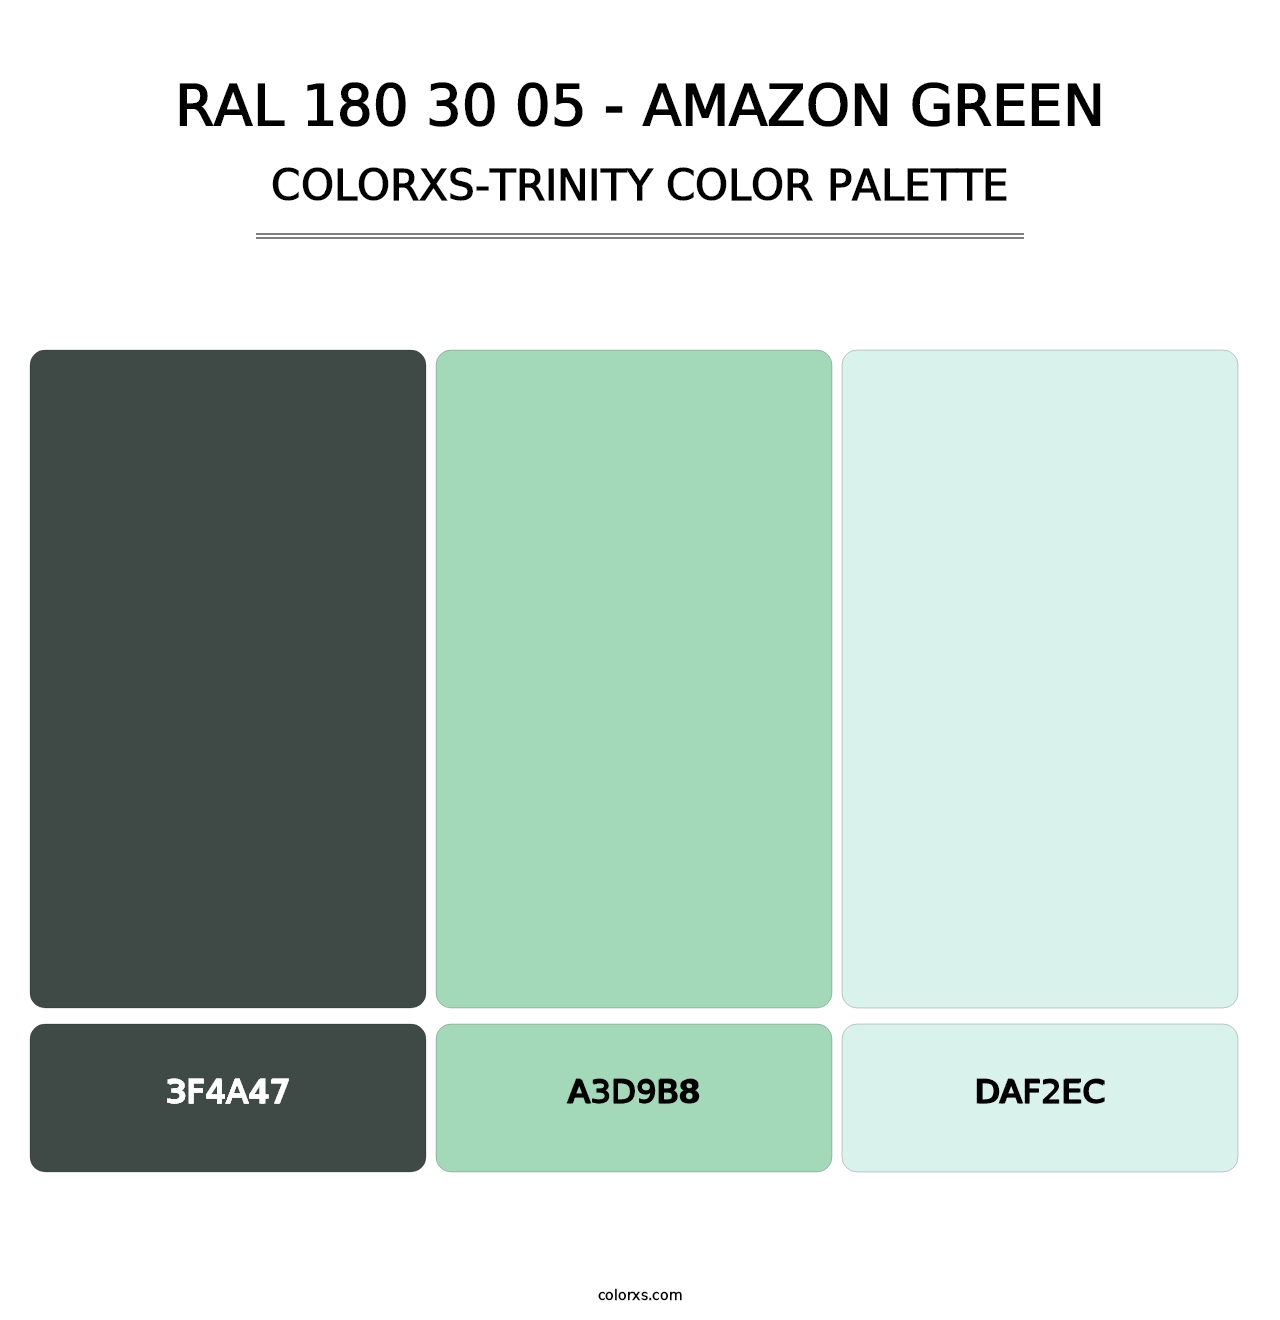 RAL 180 30 05 - Amazon Green - Colorxs Trinity Palette